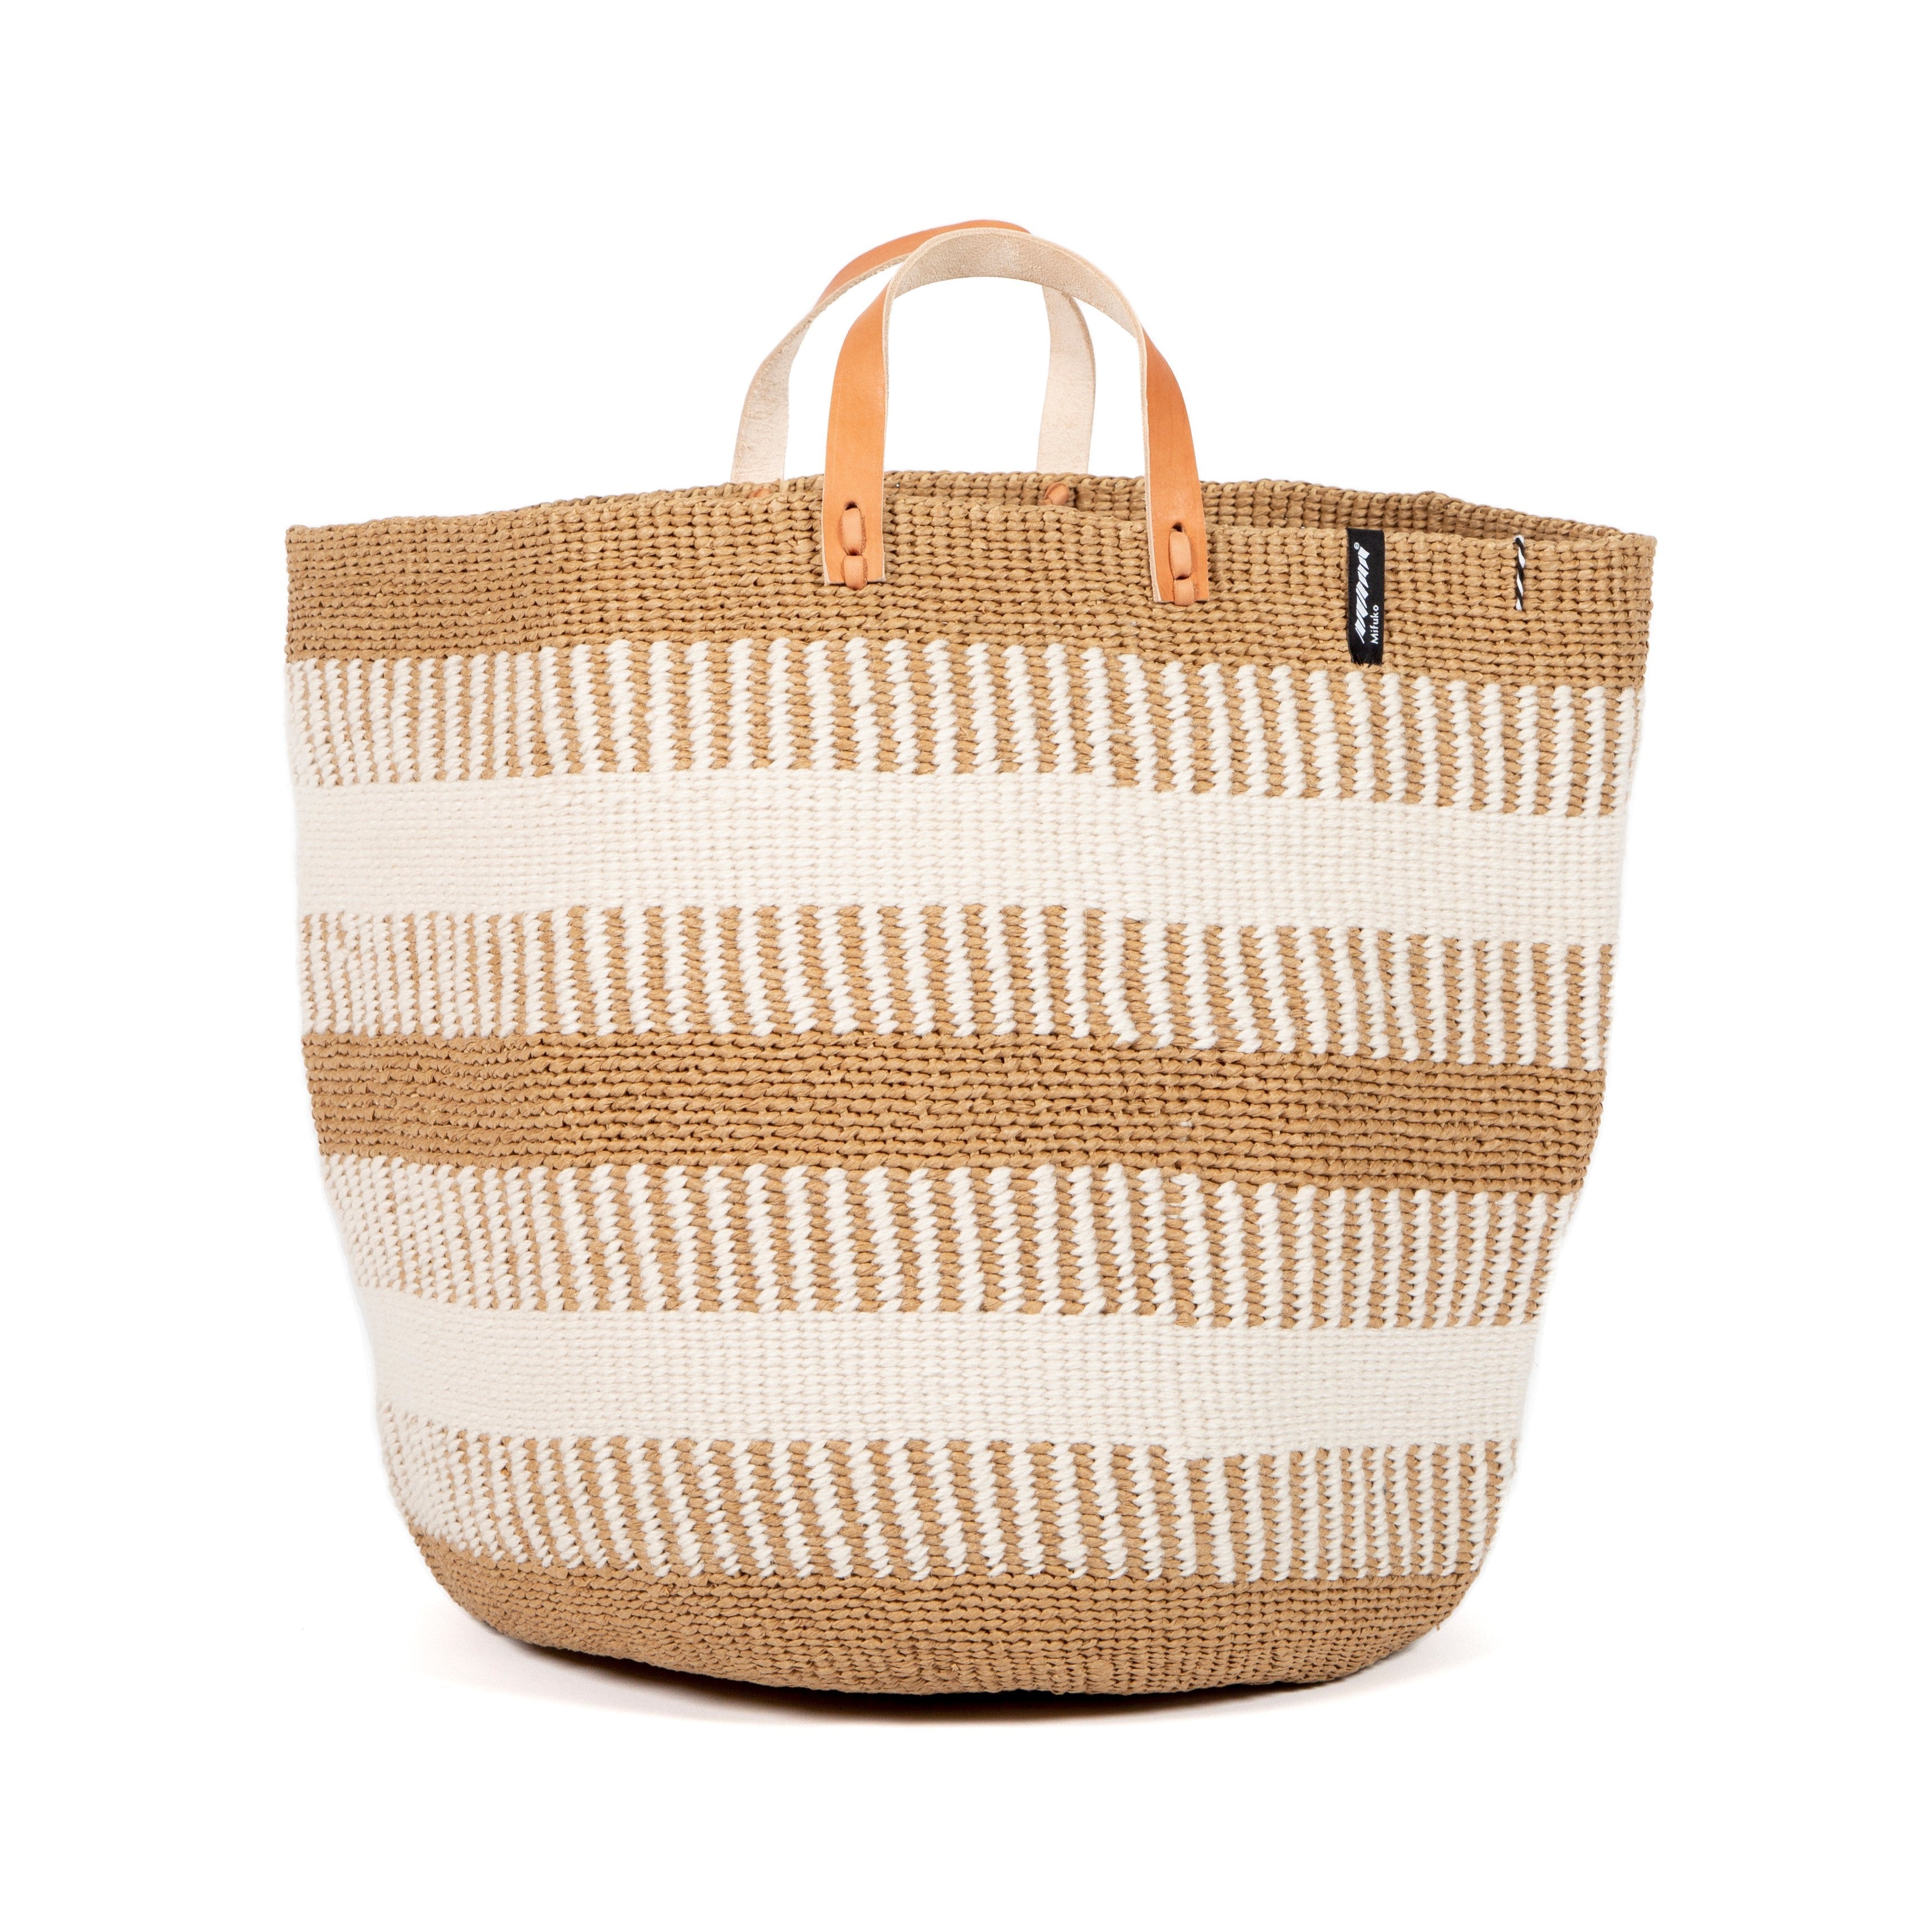 Pamba market basket | White rib weave L